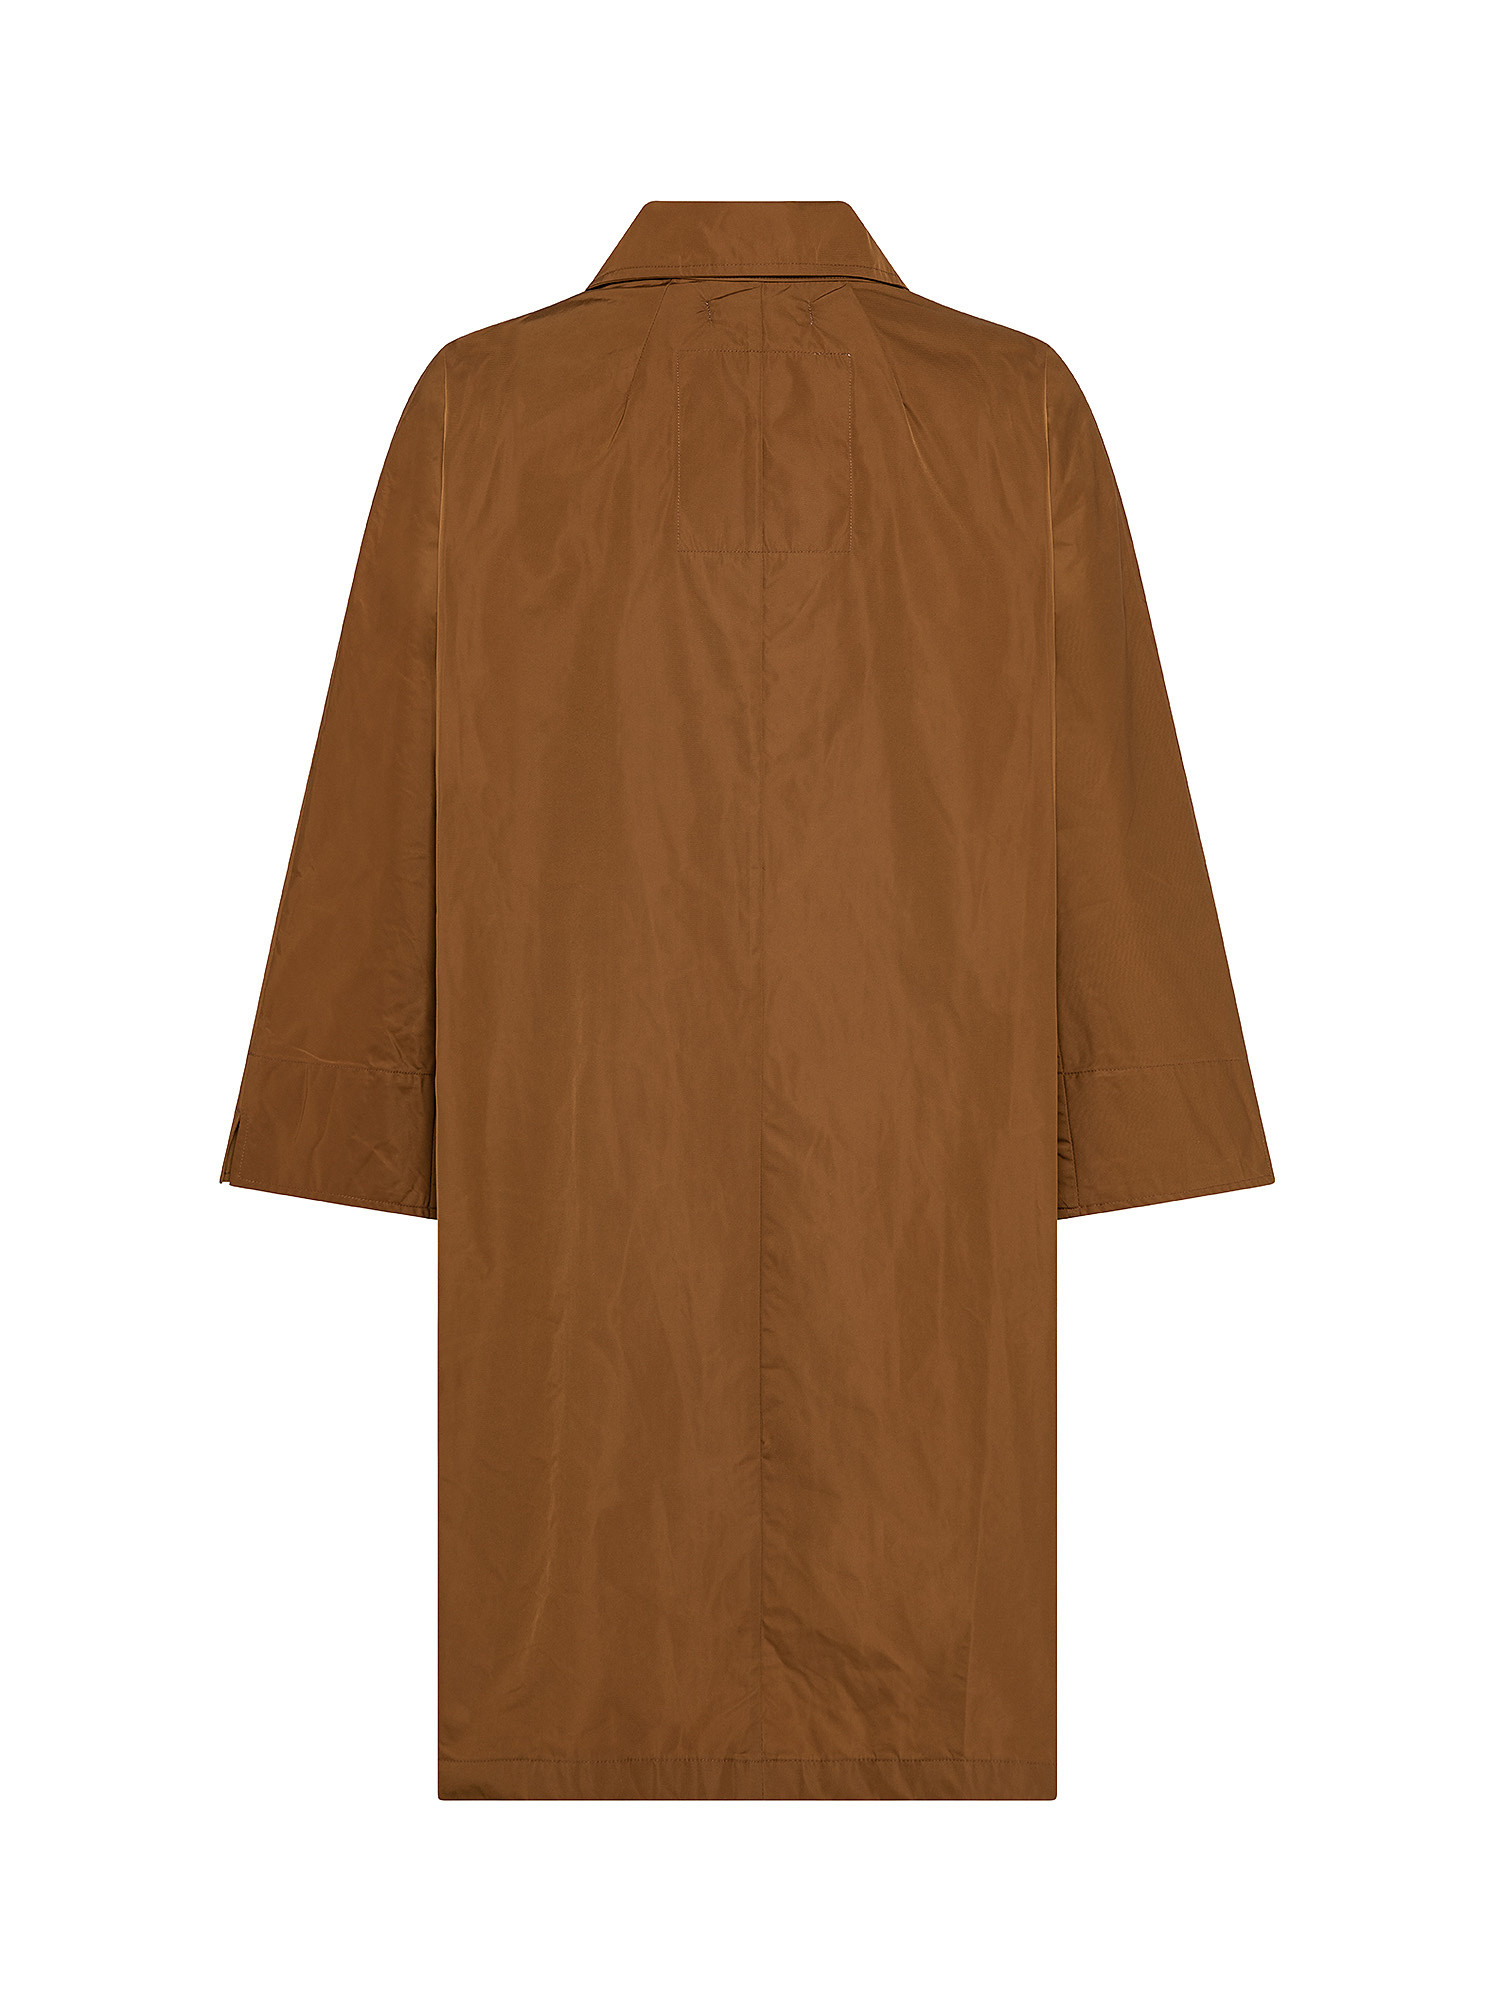 Coat, Brown, large image number 1